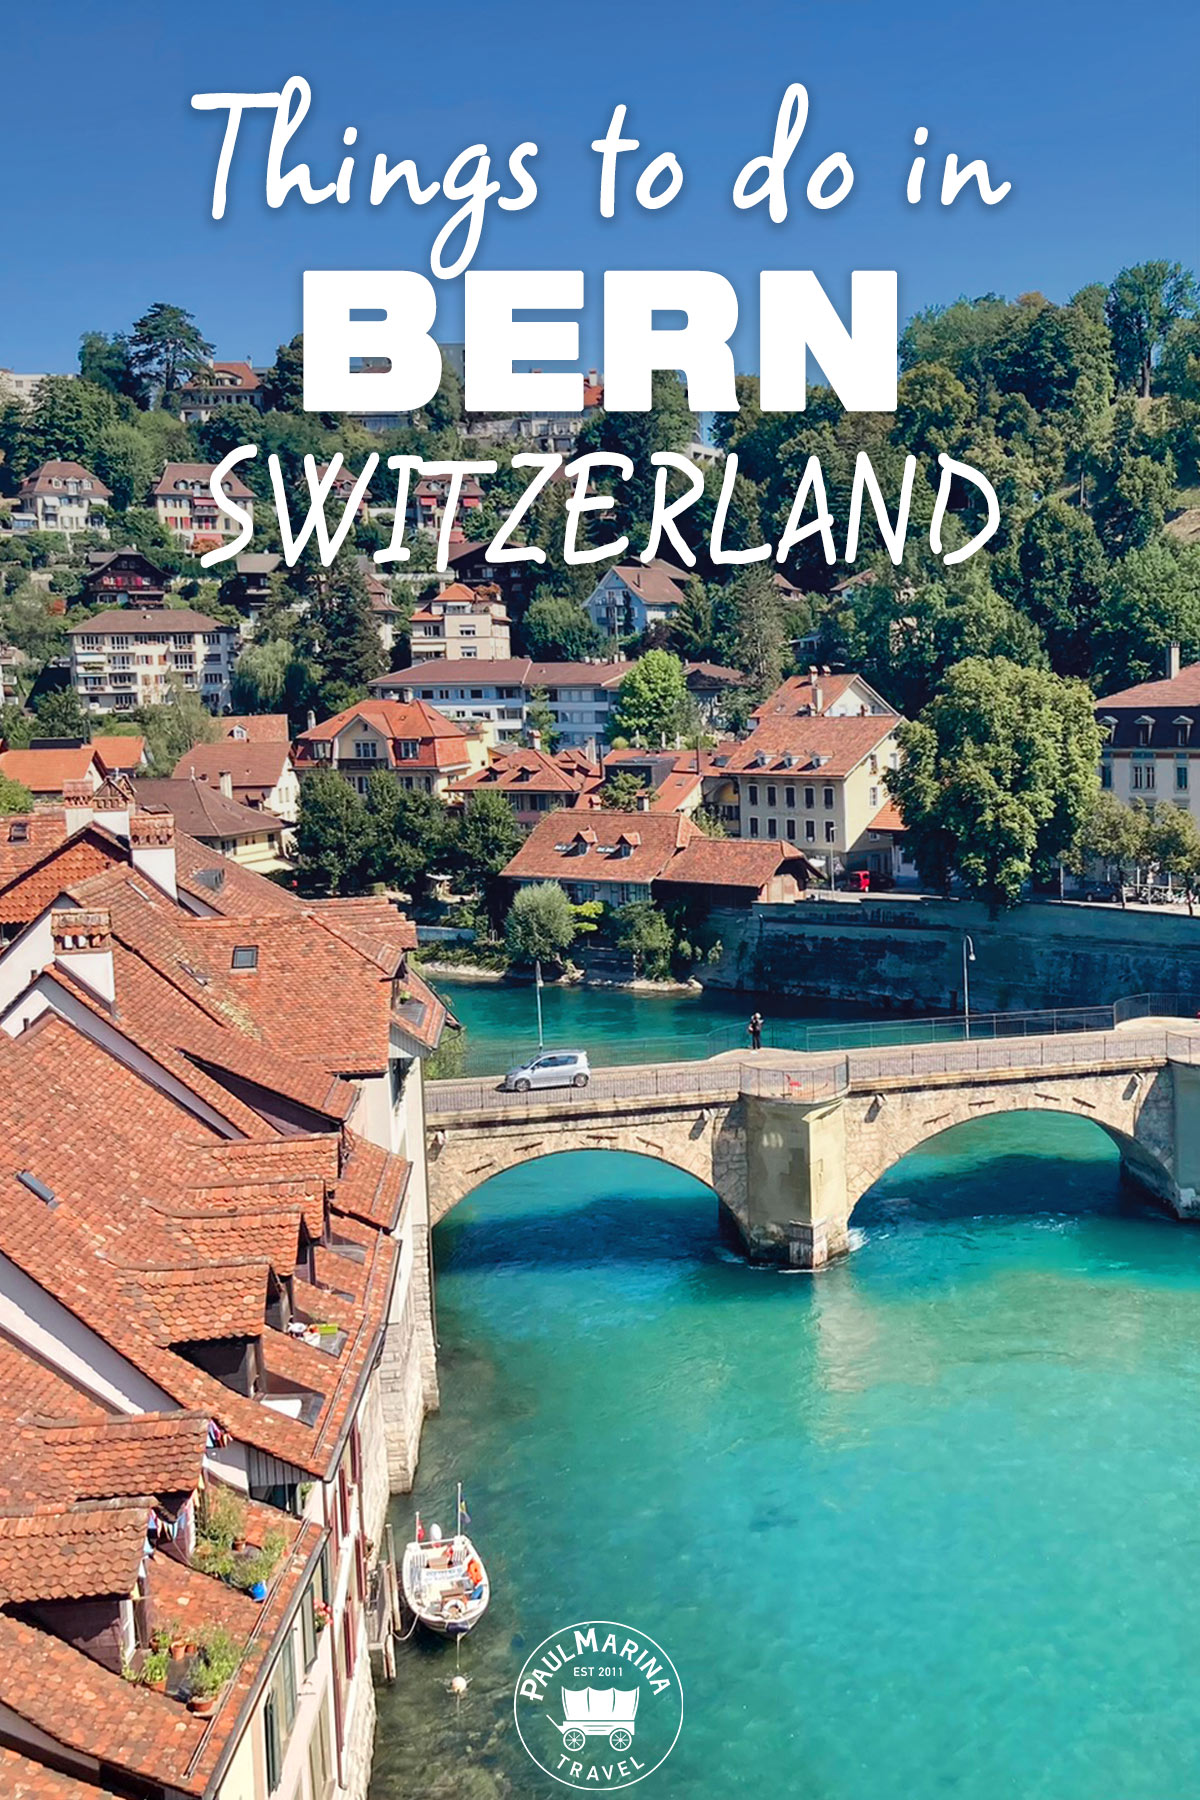 Things to do in Bern Switzerland pin image